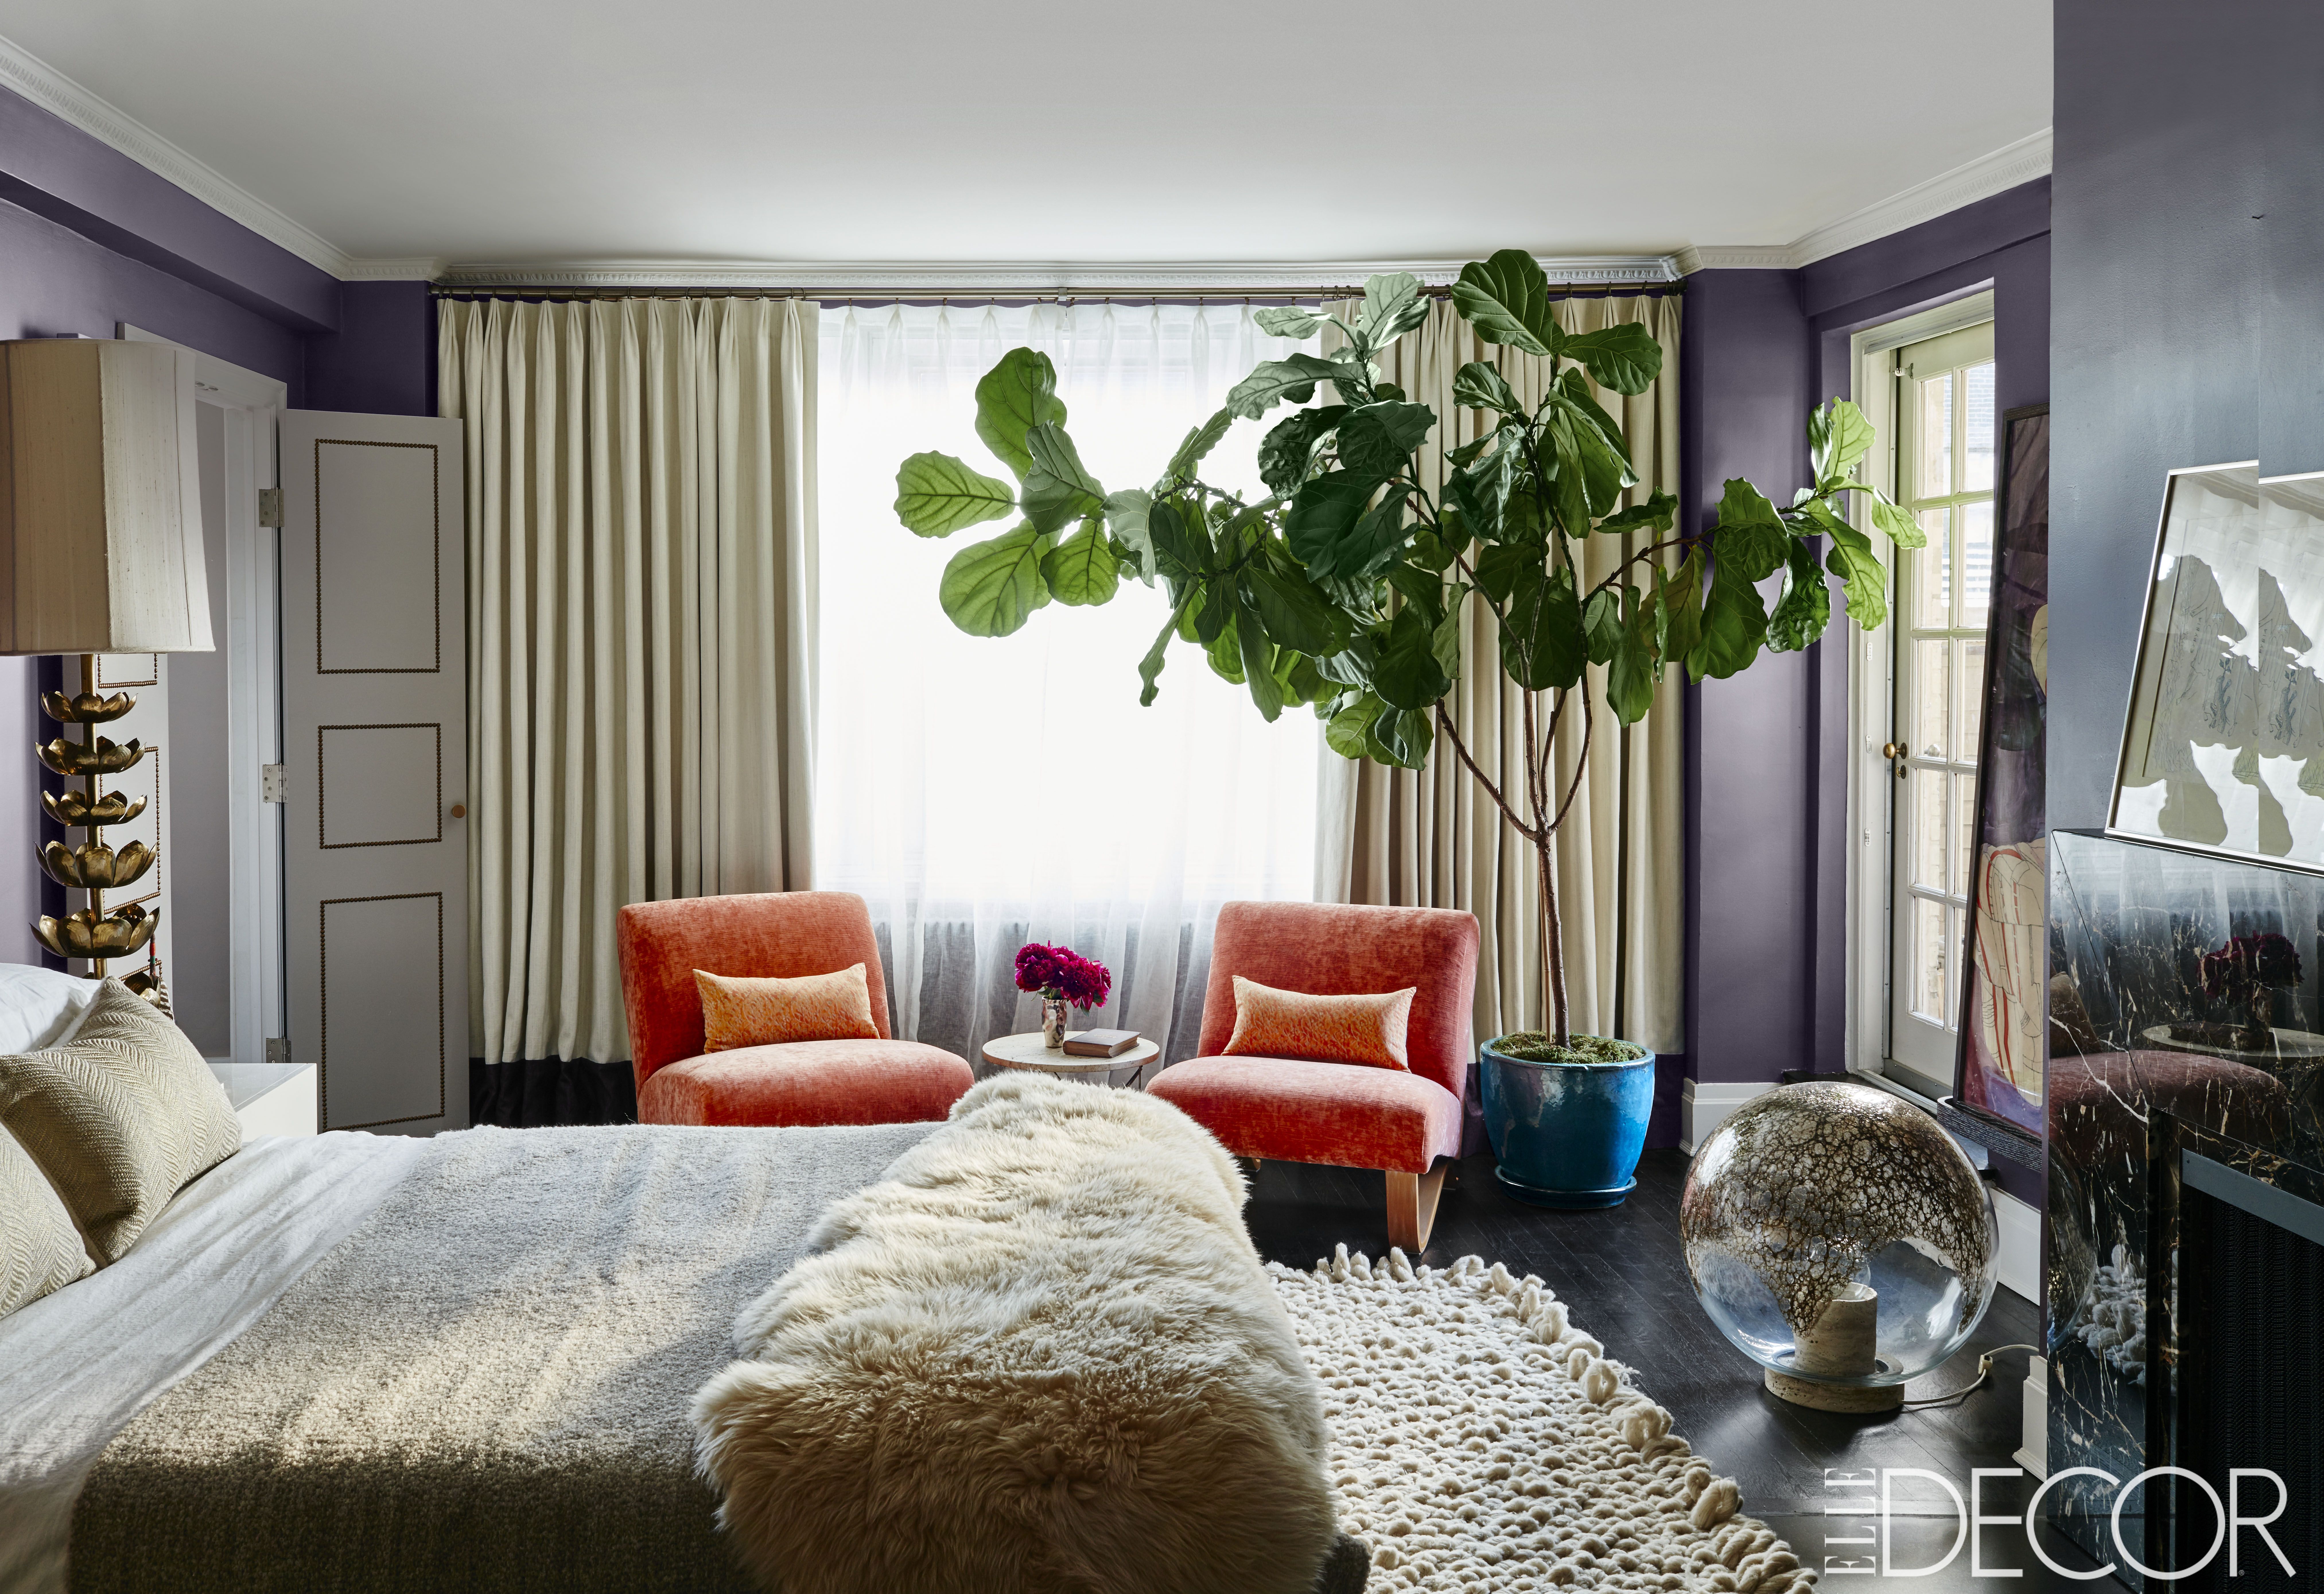 Mid Century Modern Bedroom Decorating Ideas - BEST HOME DESIGN IDEAS